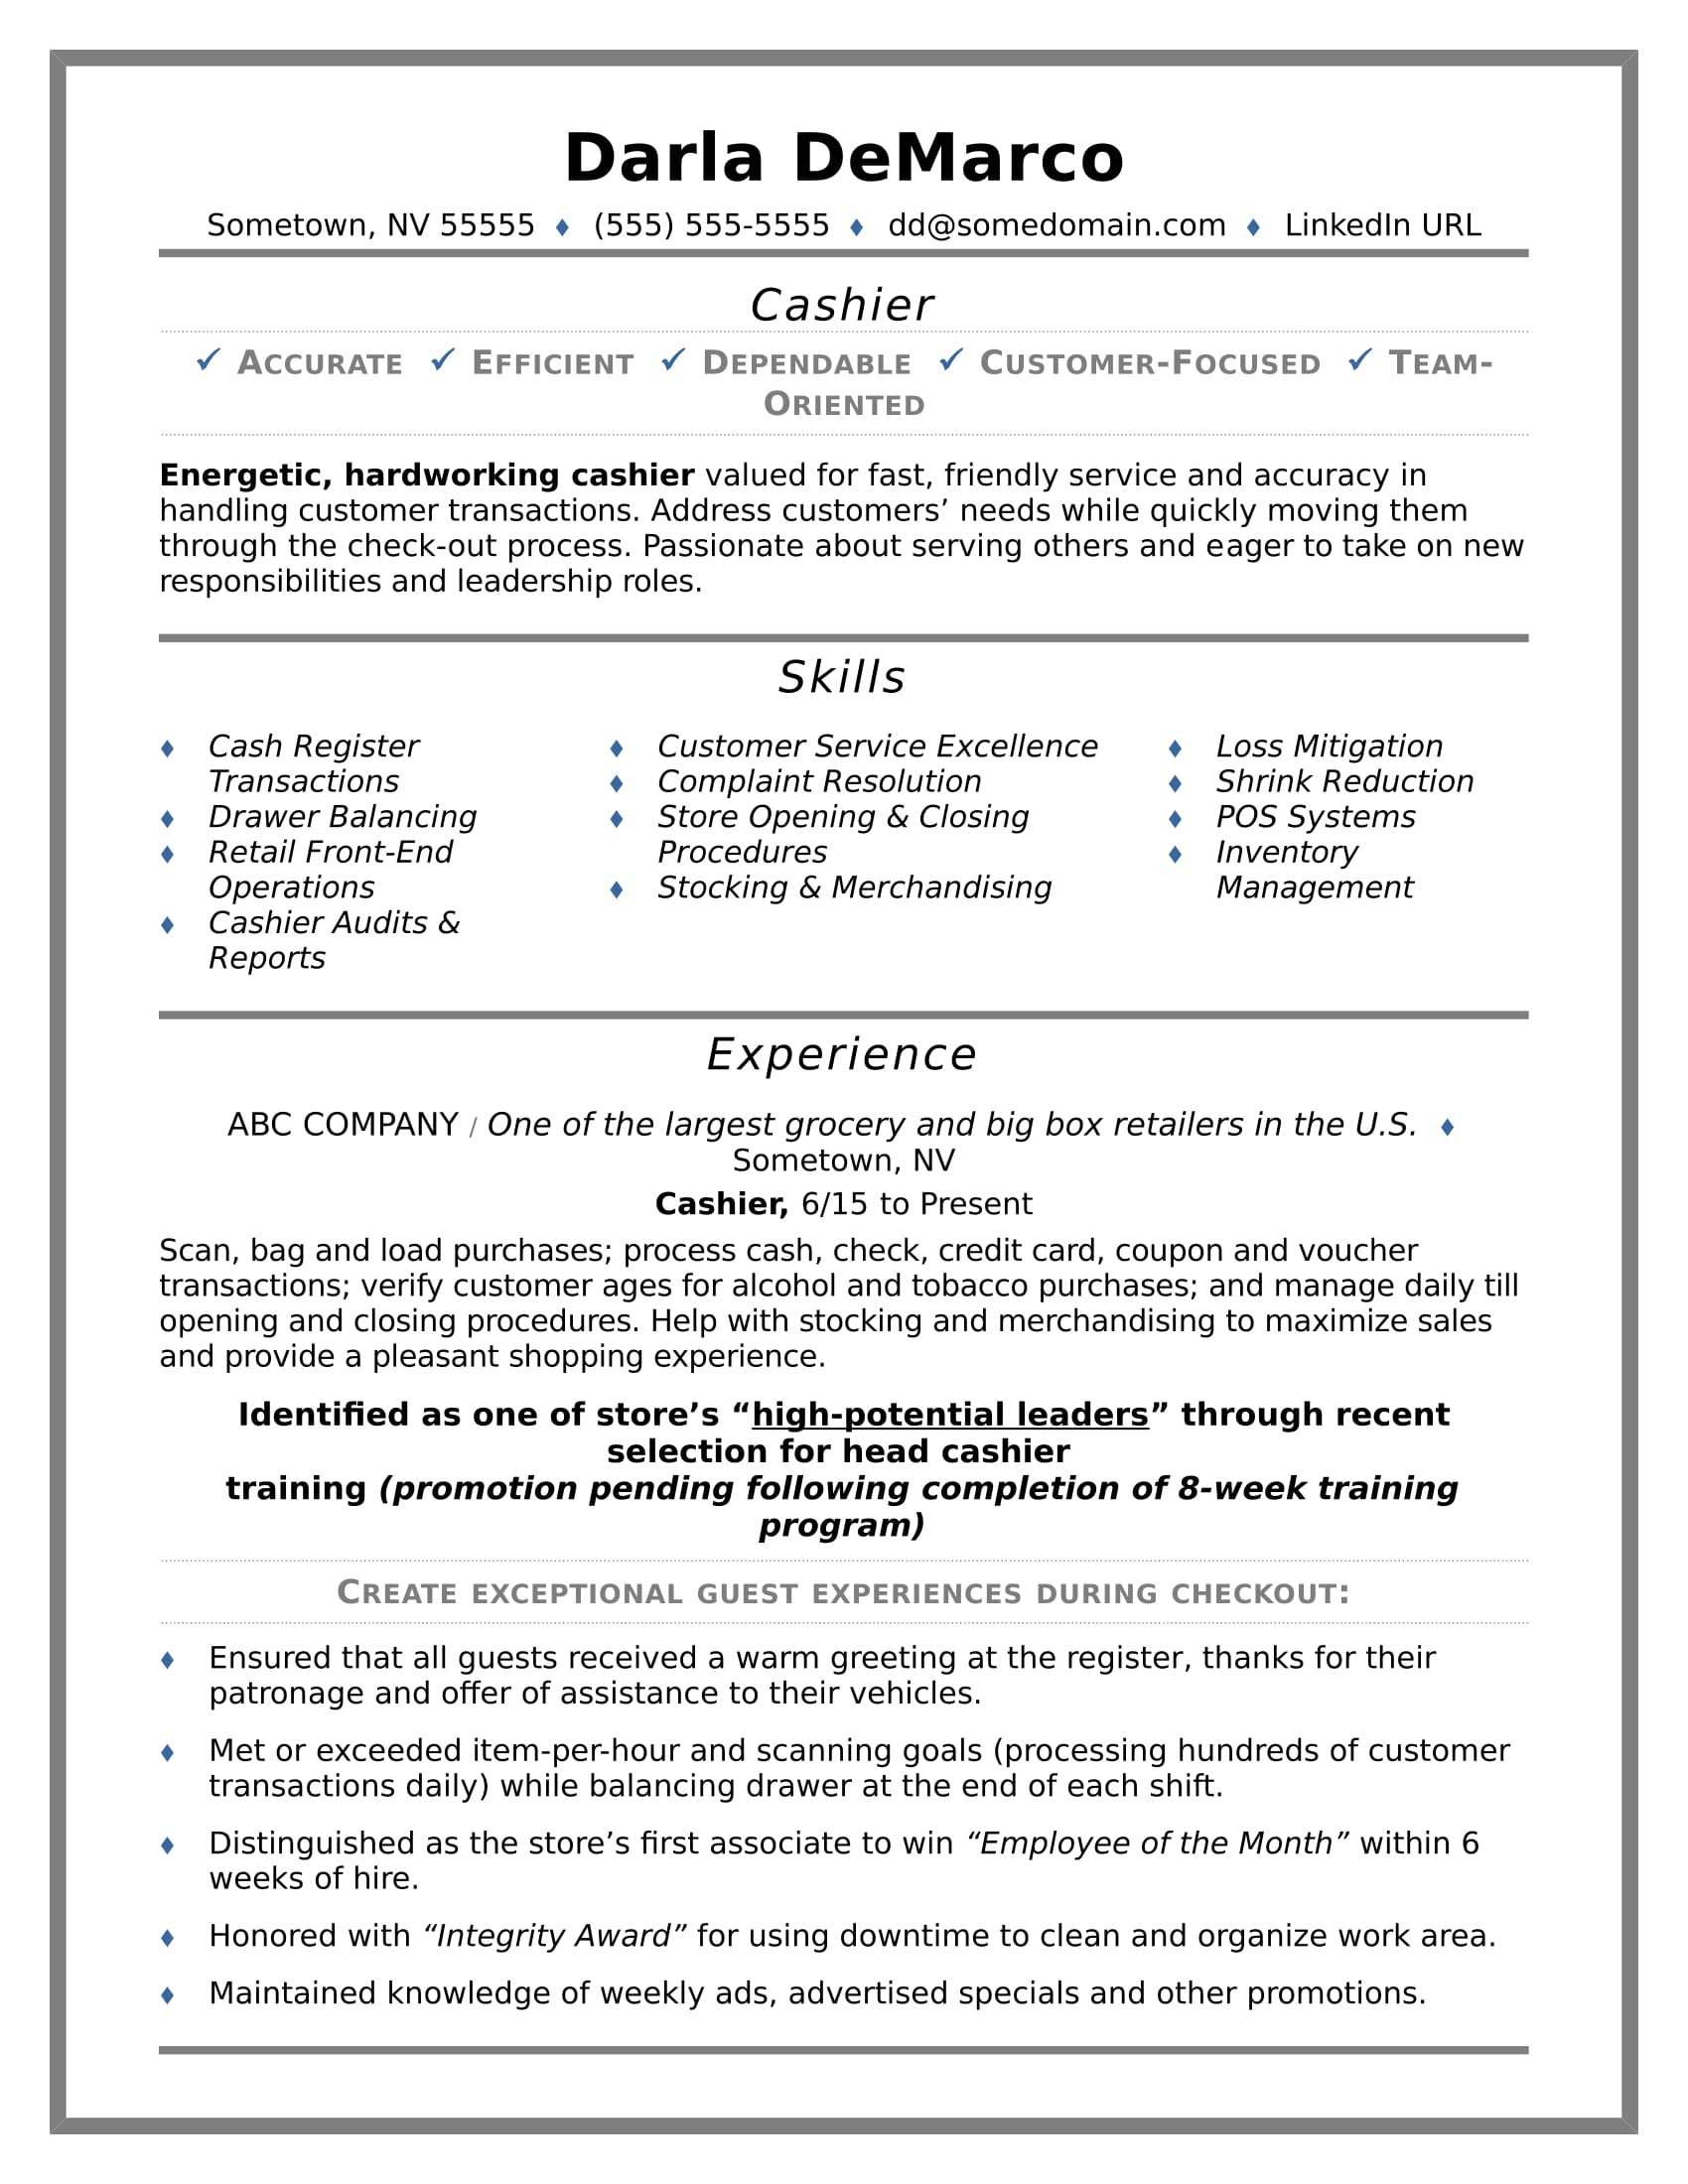 Resume Samples for Cashier Work Skills Cashier Resume Sample Monster.com